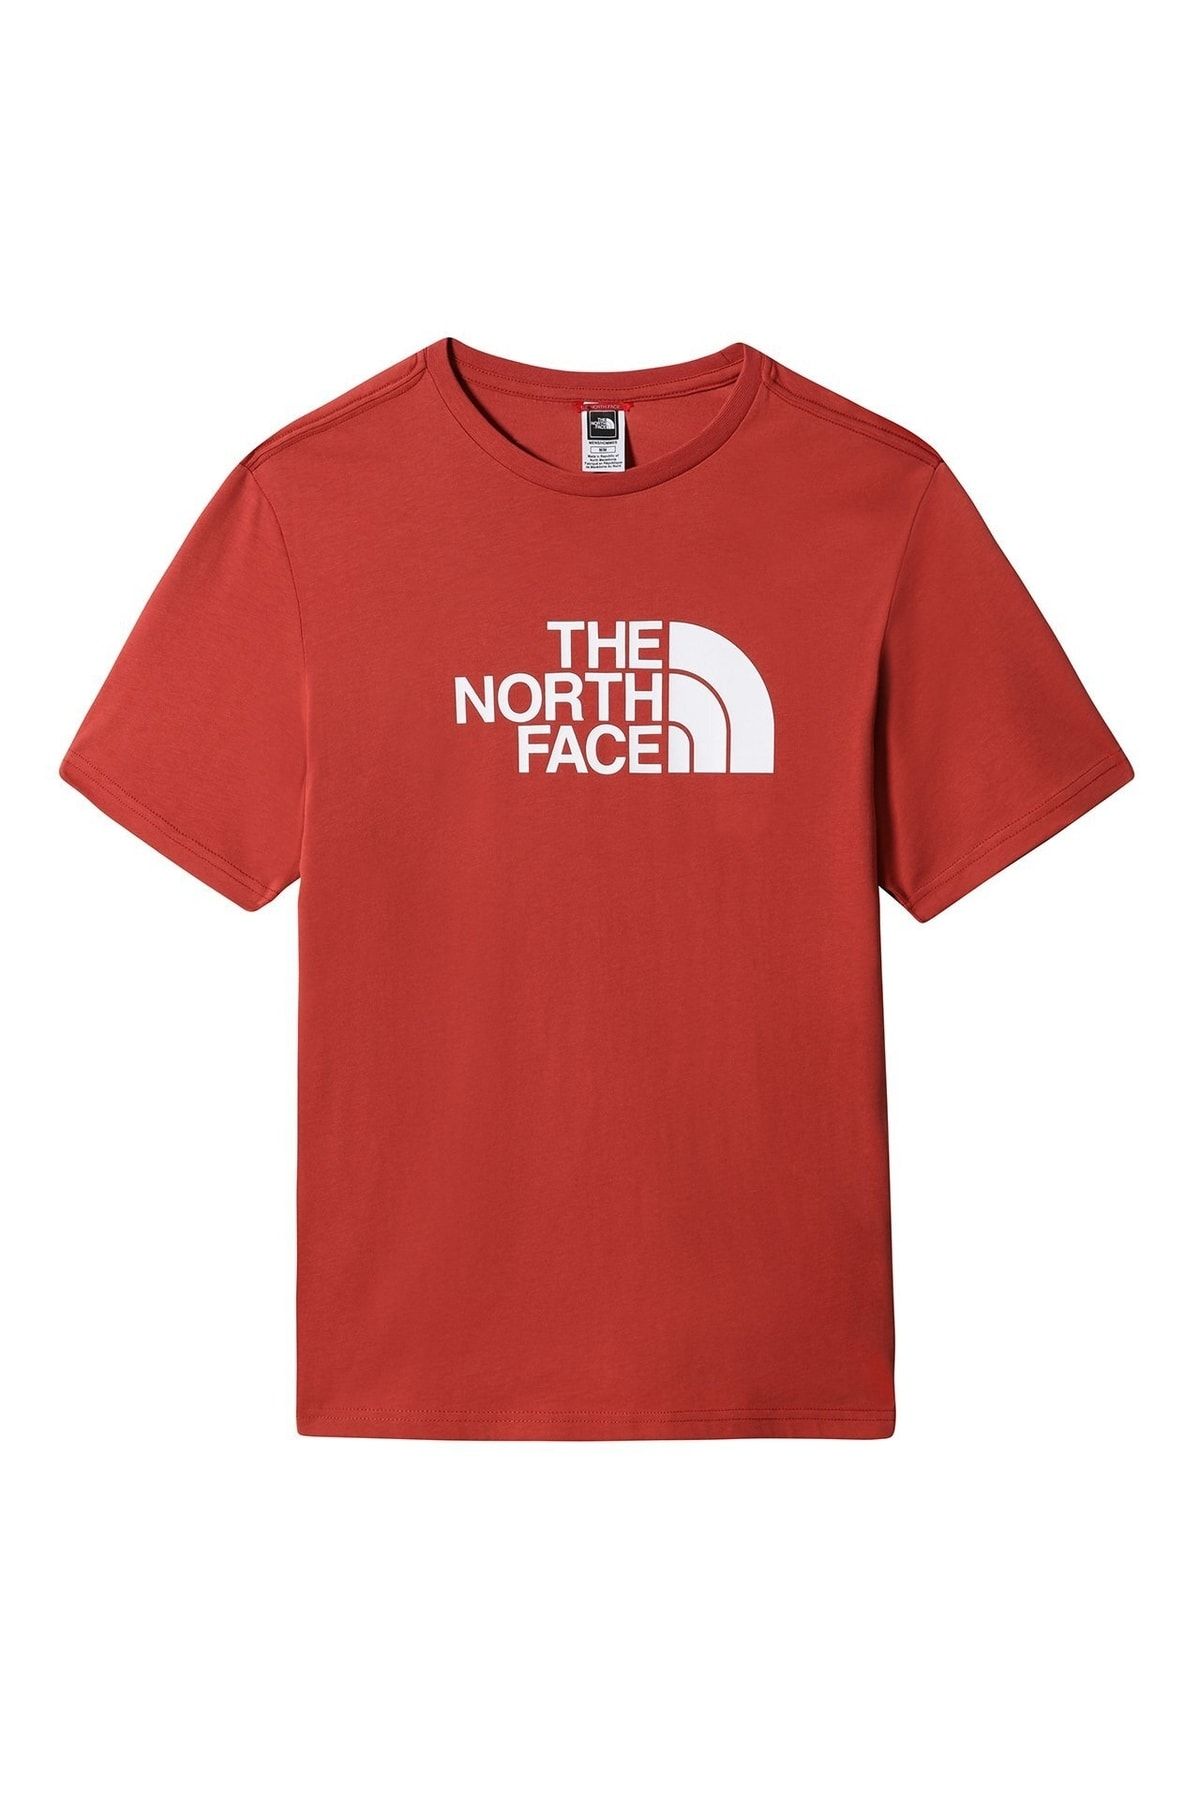 The North Face Erkek S/s Easy Tee Tişört - Eu Kırmızı